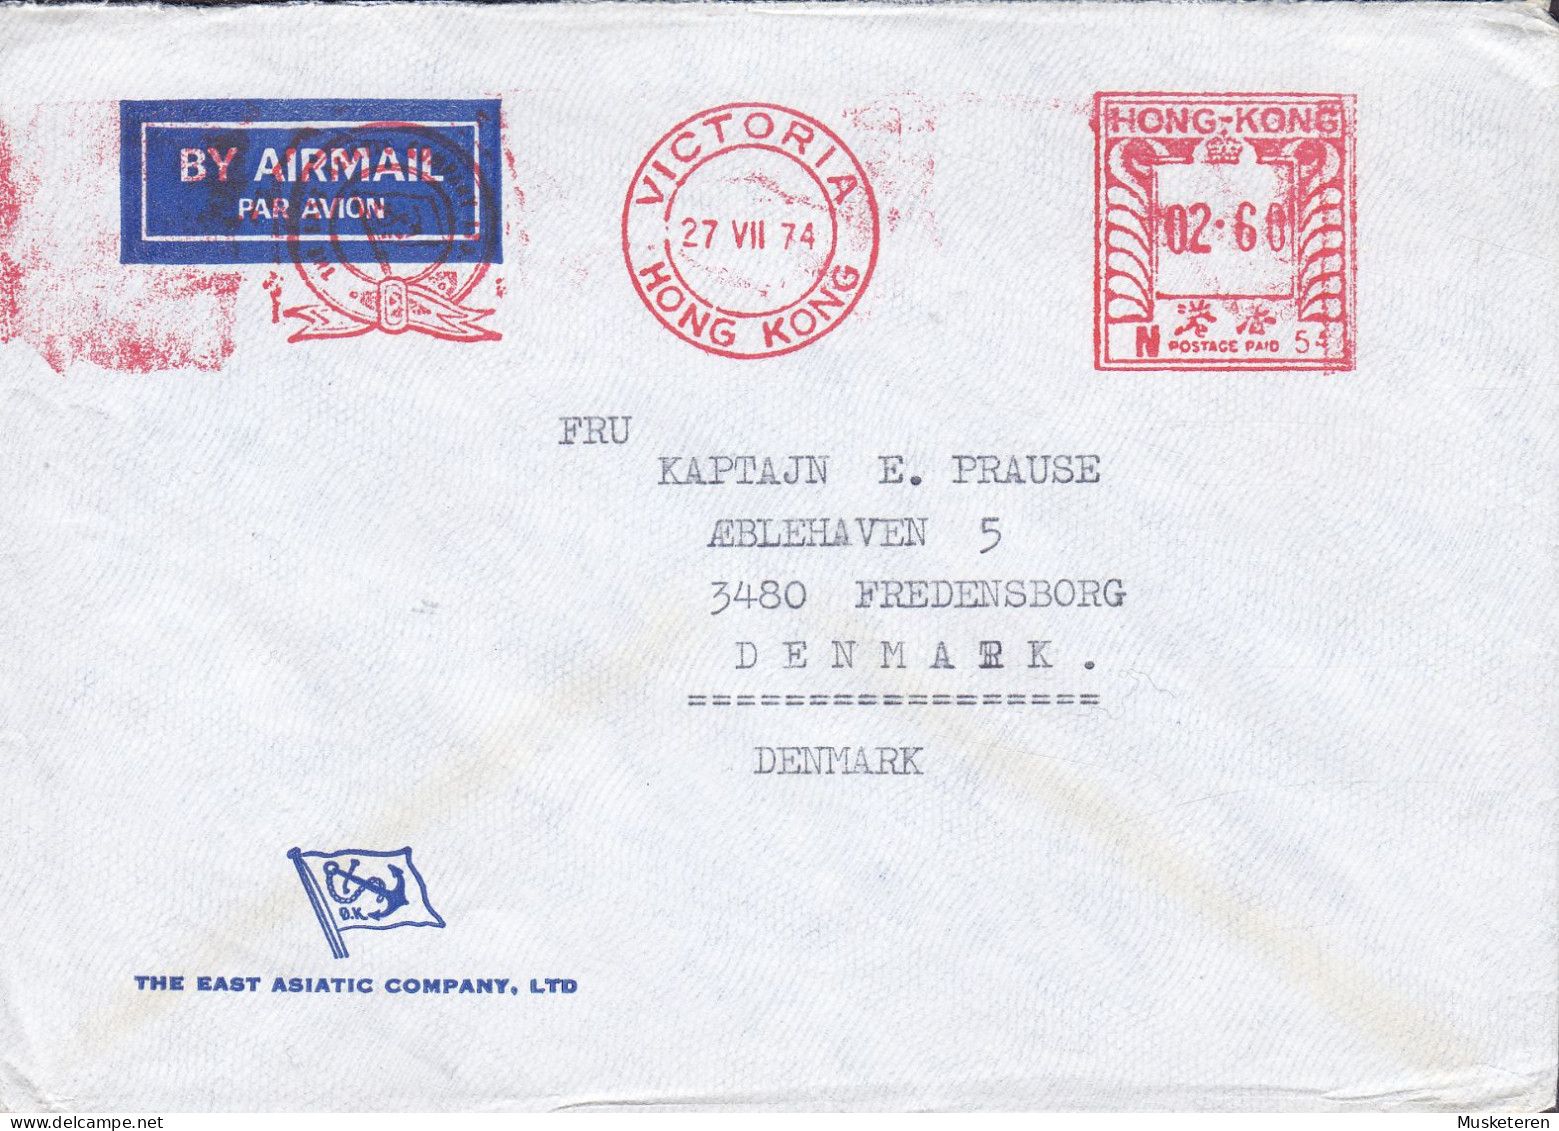 Hong Kong Captain M/S 'JUTLANDIA' THE EAST ASIATIC COMPANY, VICTORIA 1974 Meter Ships Mail Cover FREDENSBORG Denmark - Storia Postale